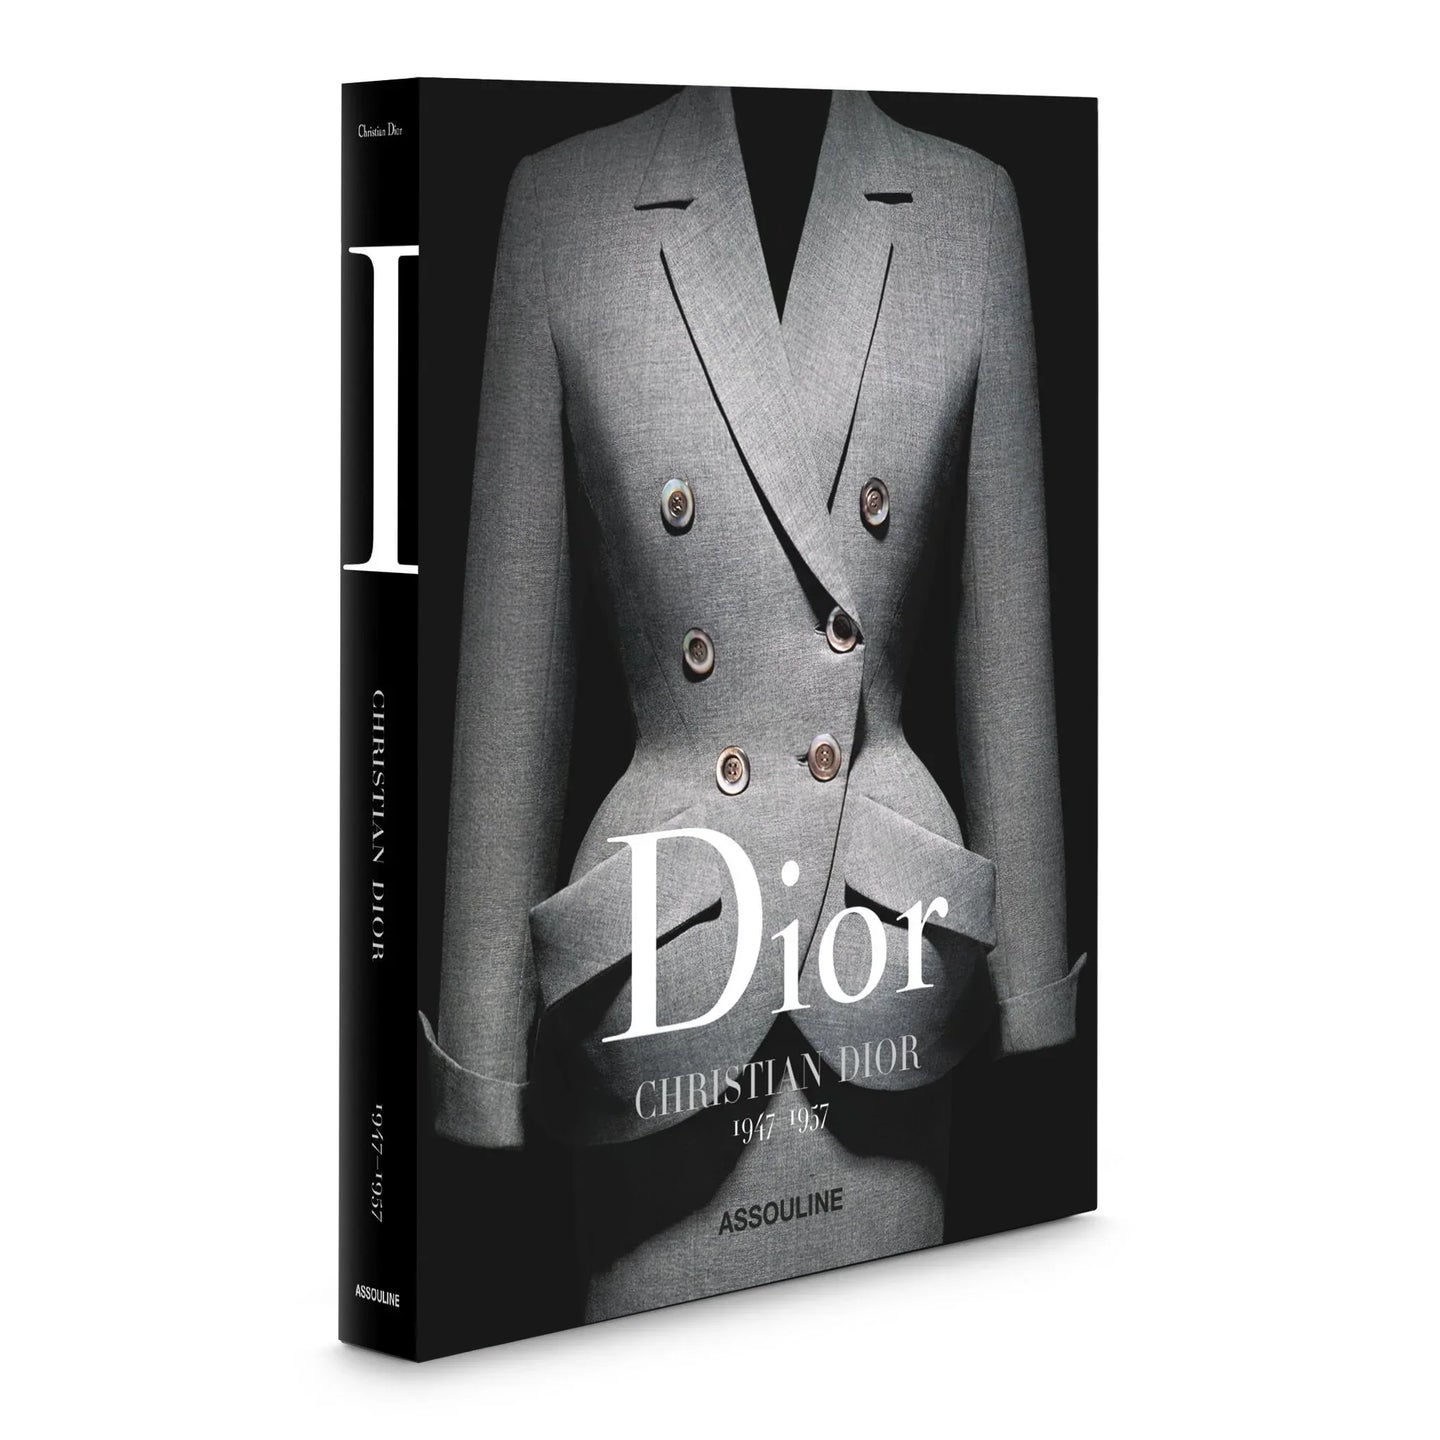 dior by christian dior: 1947-1957 1